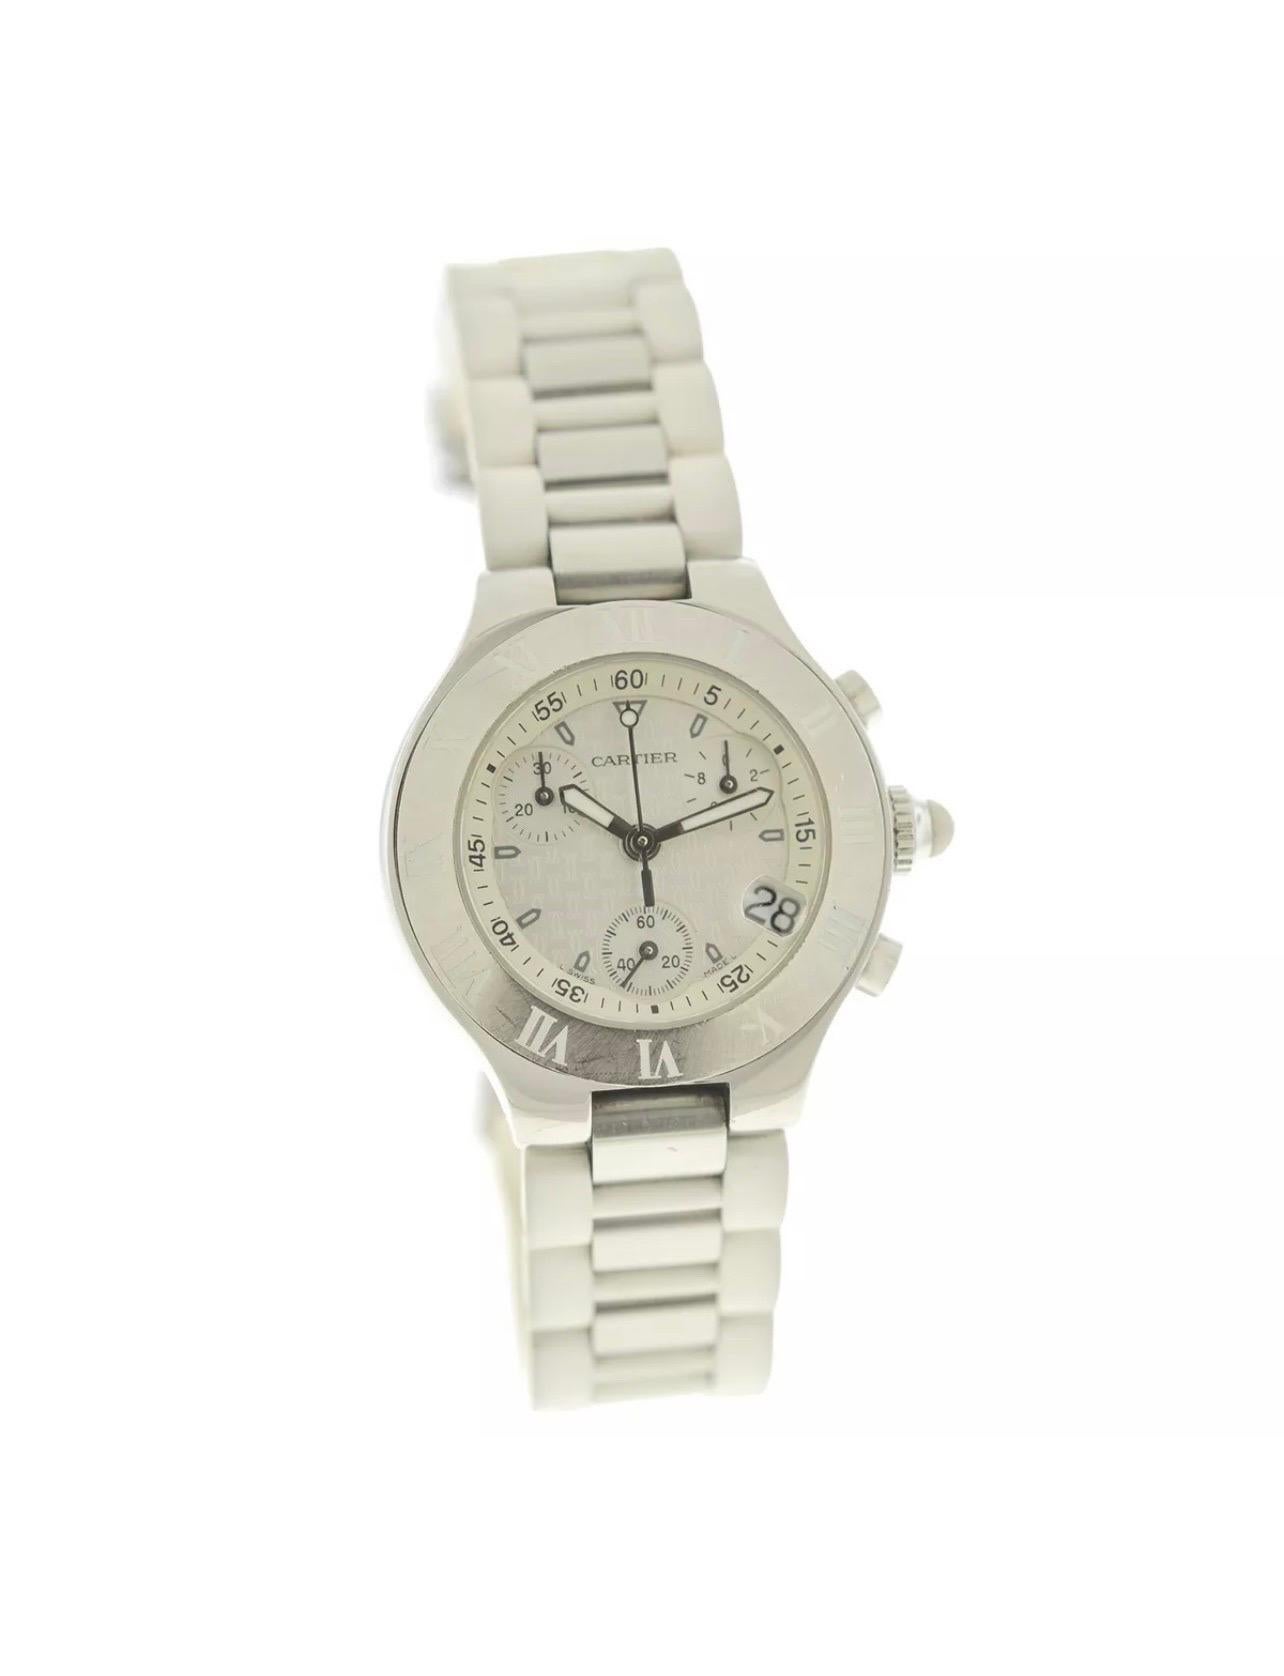 Cartier Chronoscaph Cream Women's Rubber Strap Watch, 2996 For Sale 11